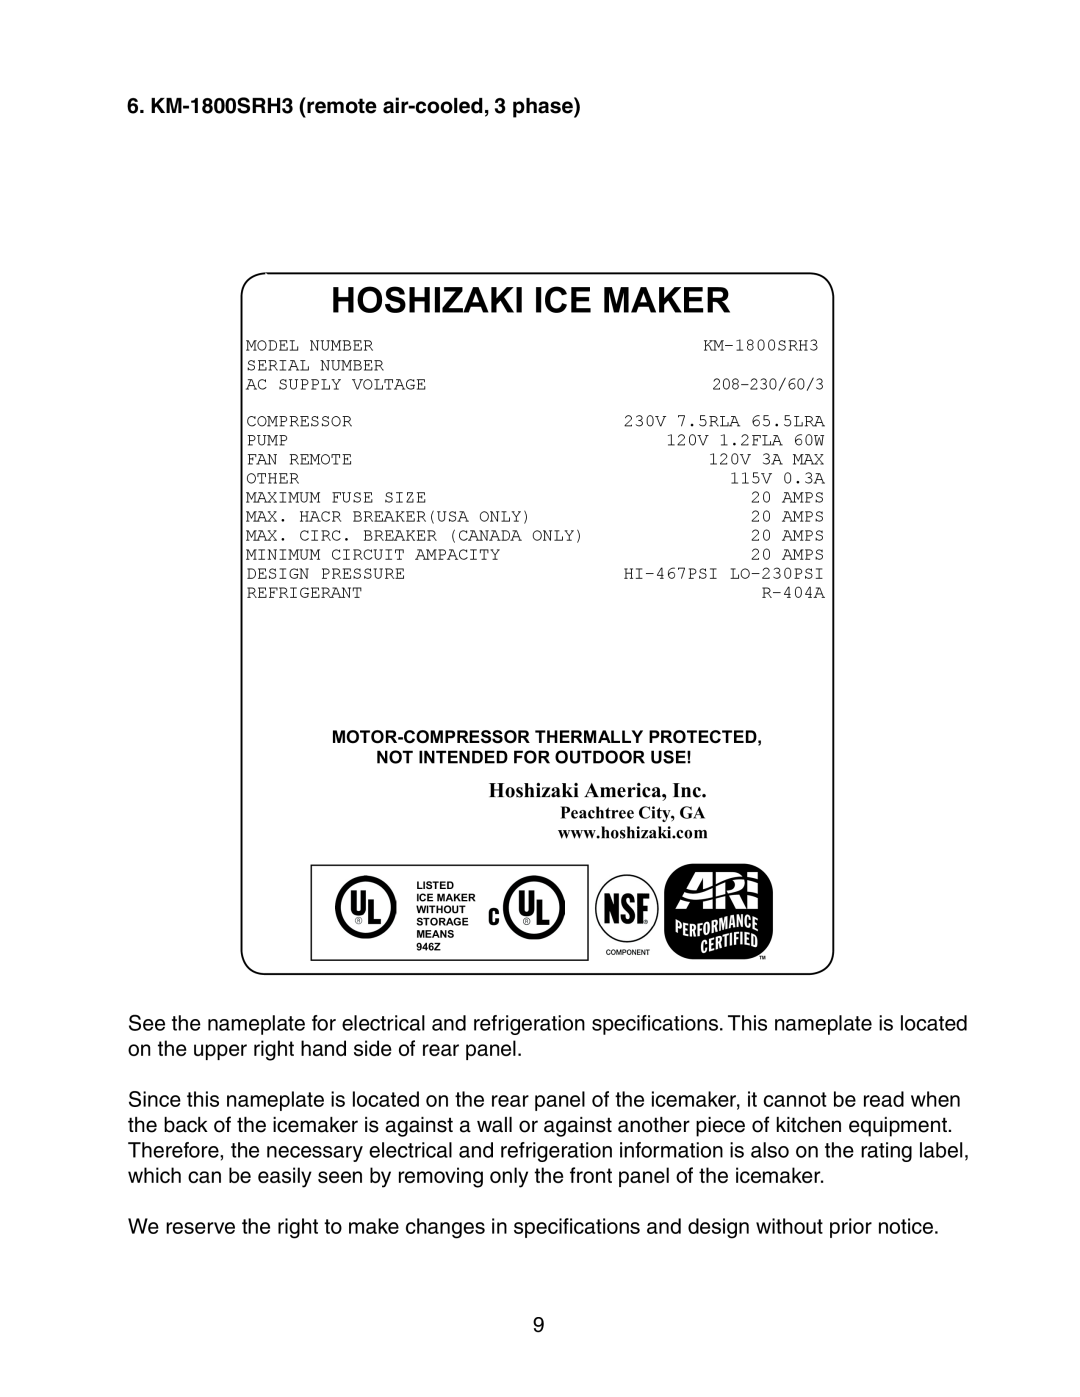 Hoshizaki KM-1800SRH/3, KM-1800SWH/3 KM-1800SRH3 remote air-cooled, 3 phase, Hoshizaki Ice Maker, Hoshizaki America, Inc 